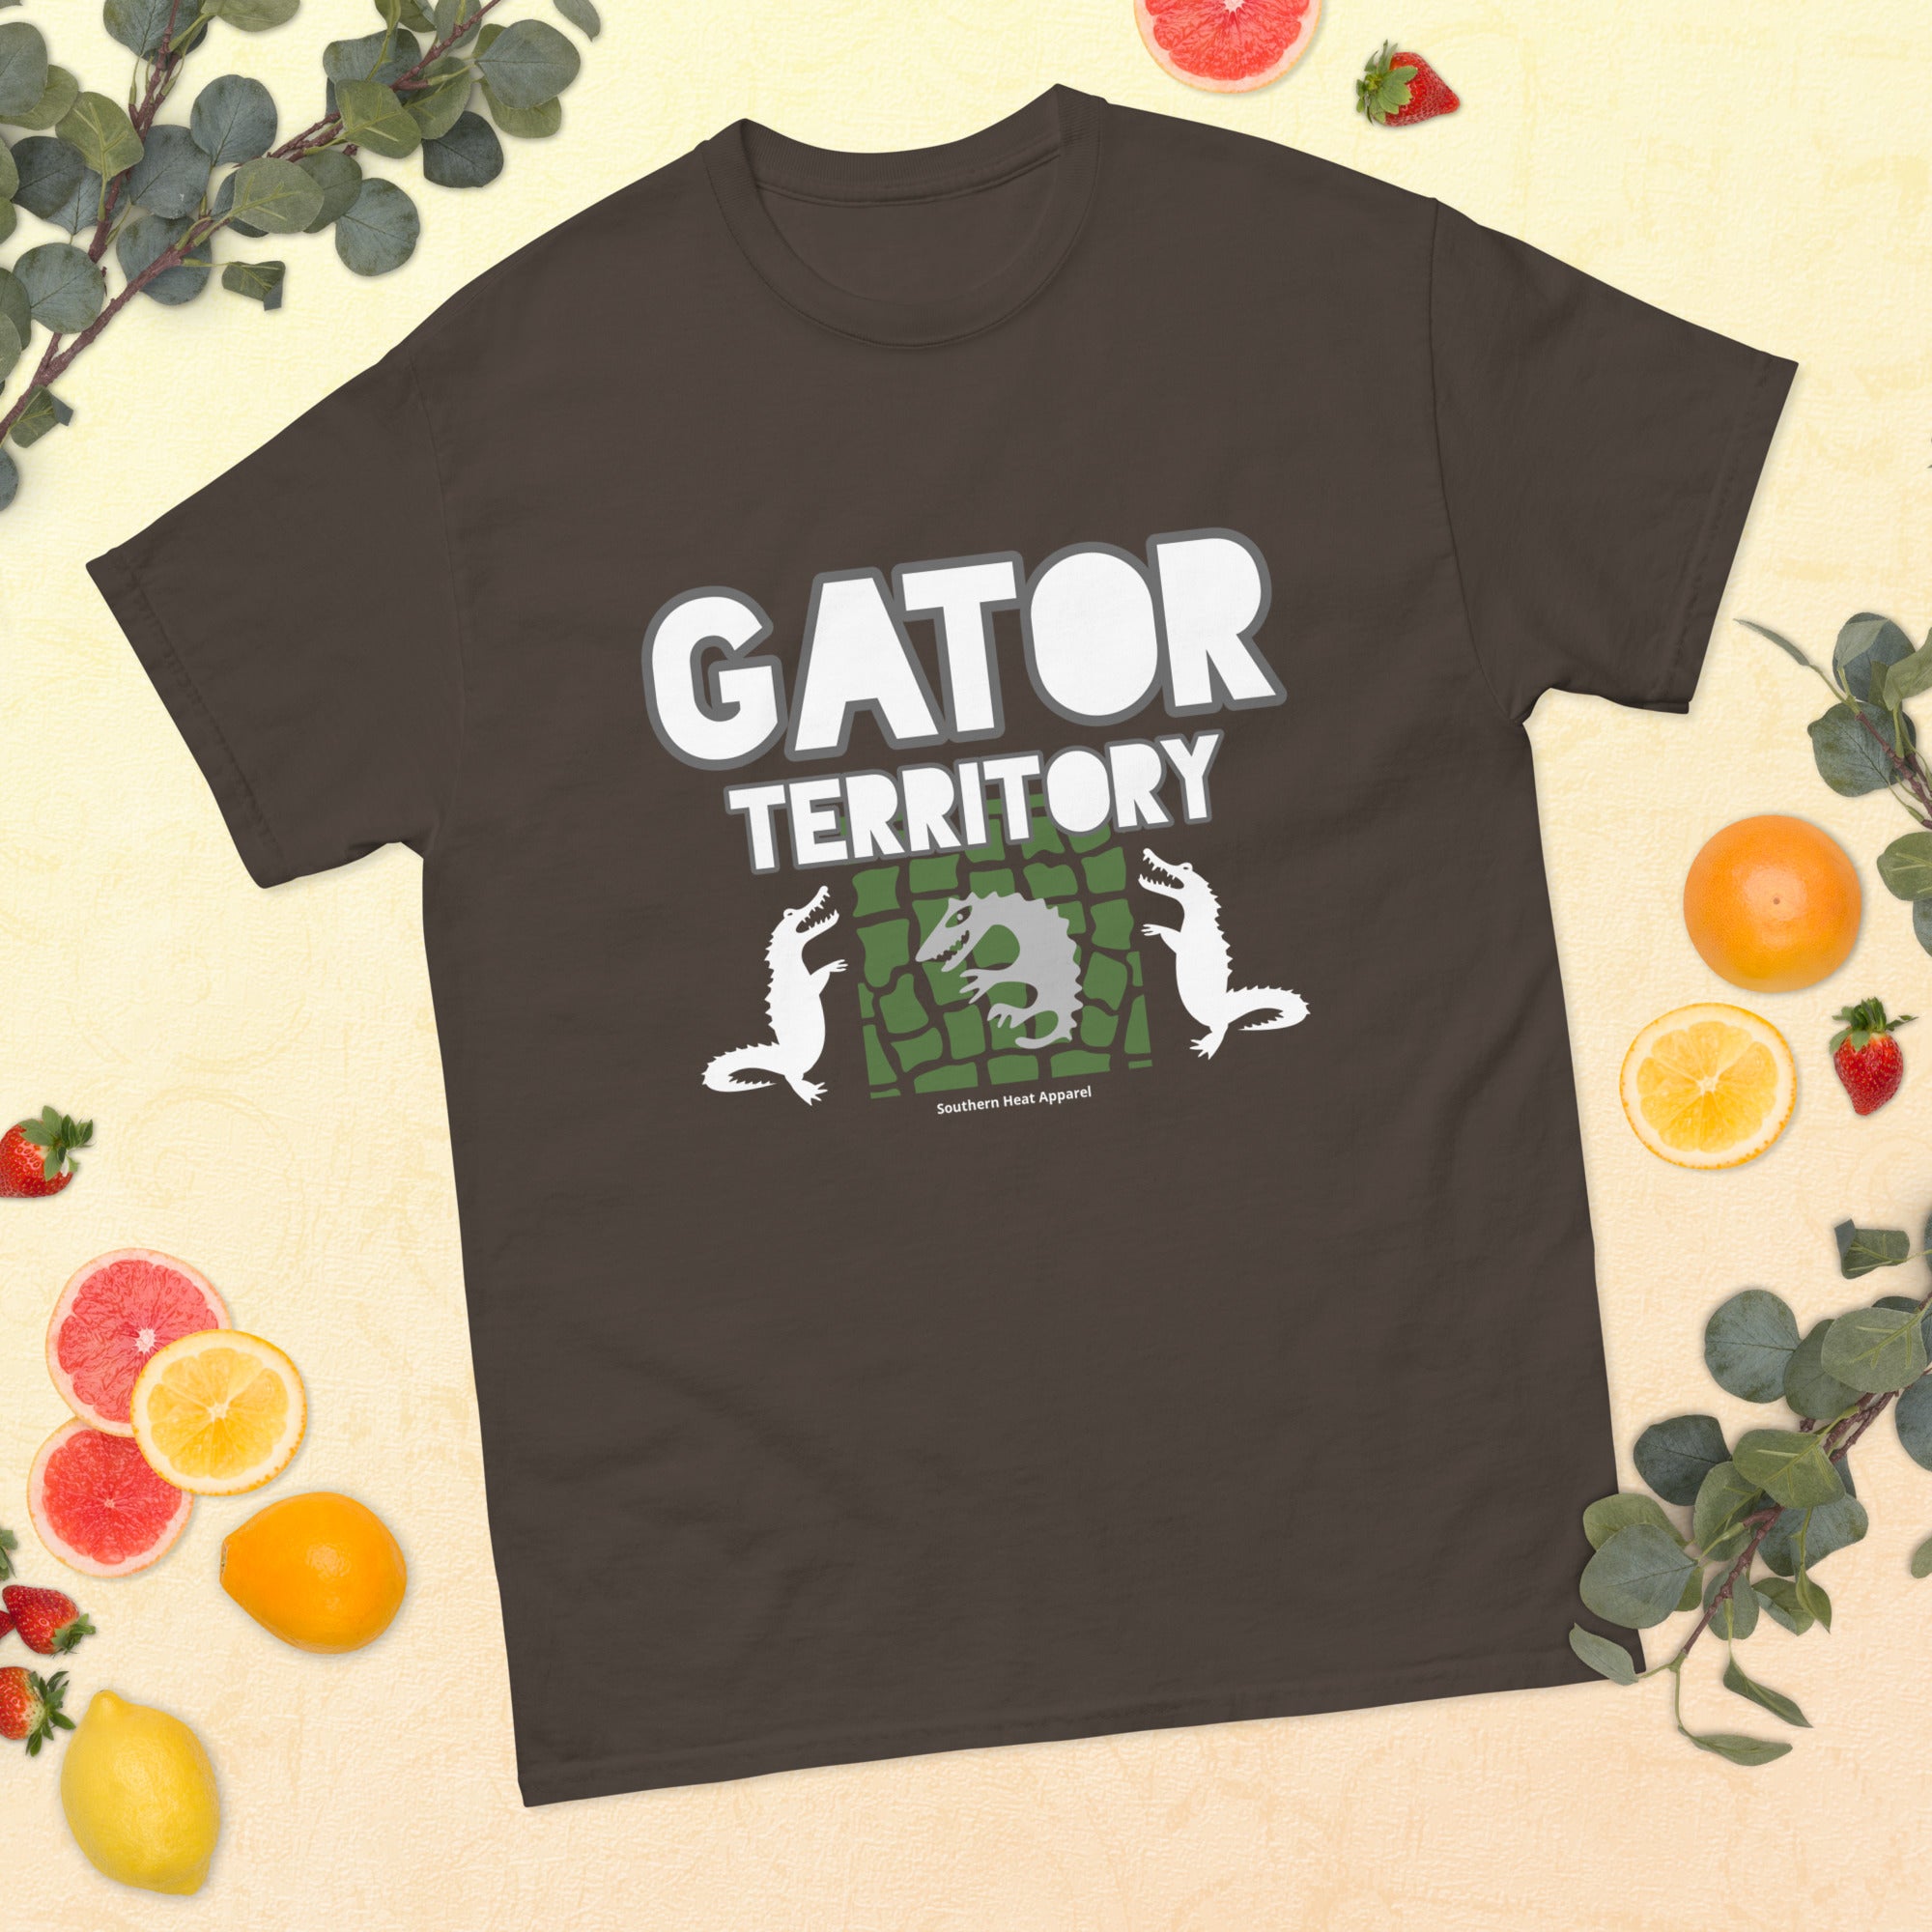 Gator Territory-Men's classic tee